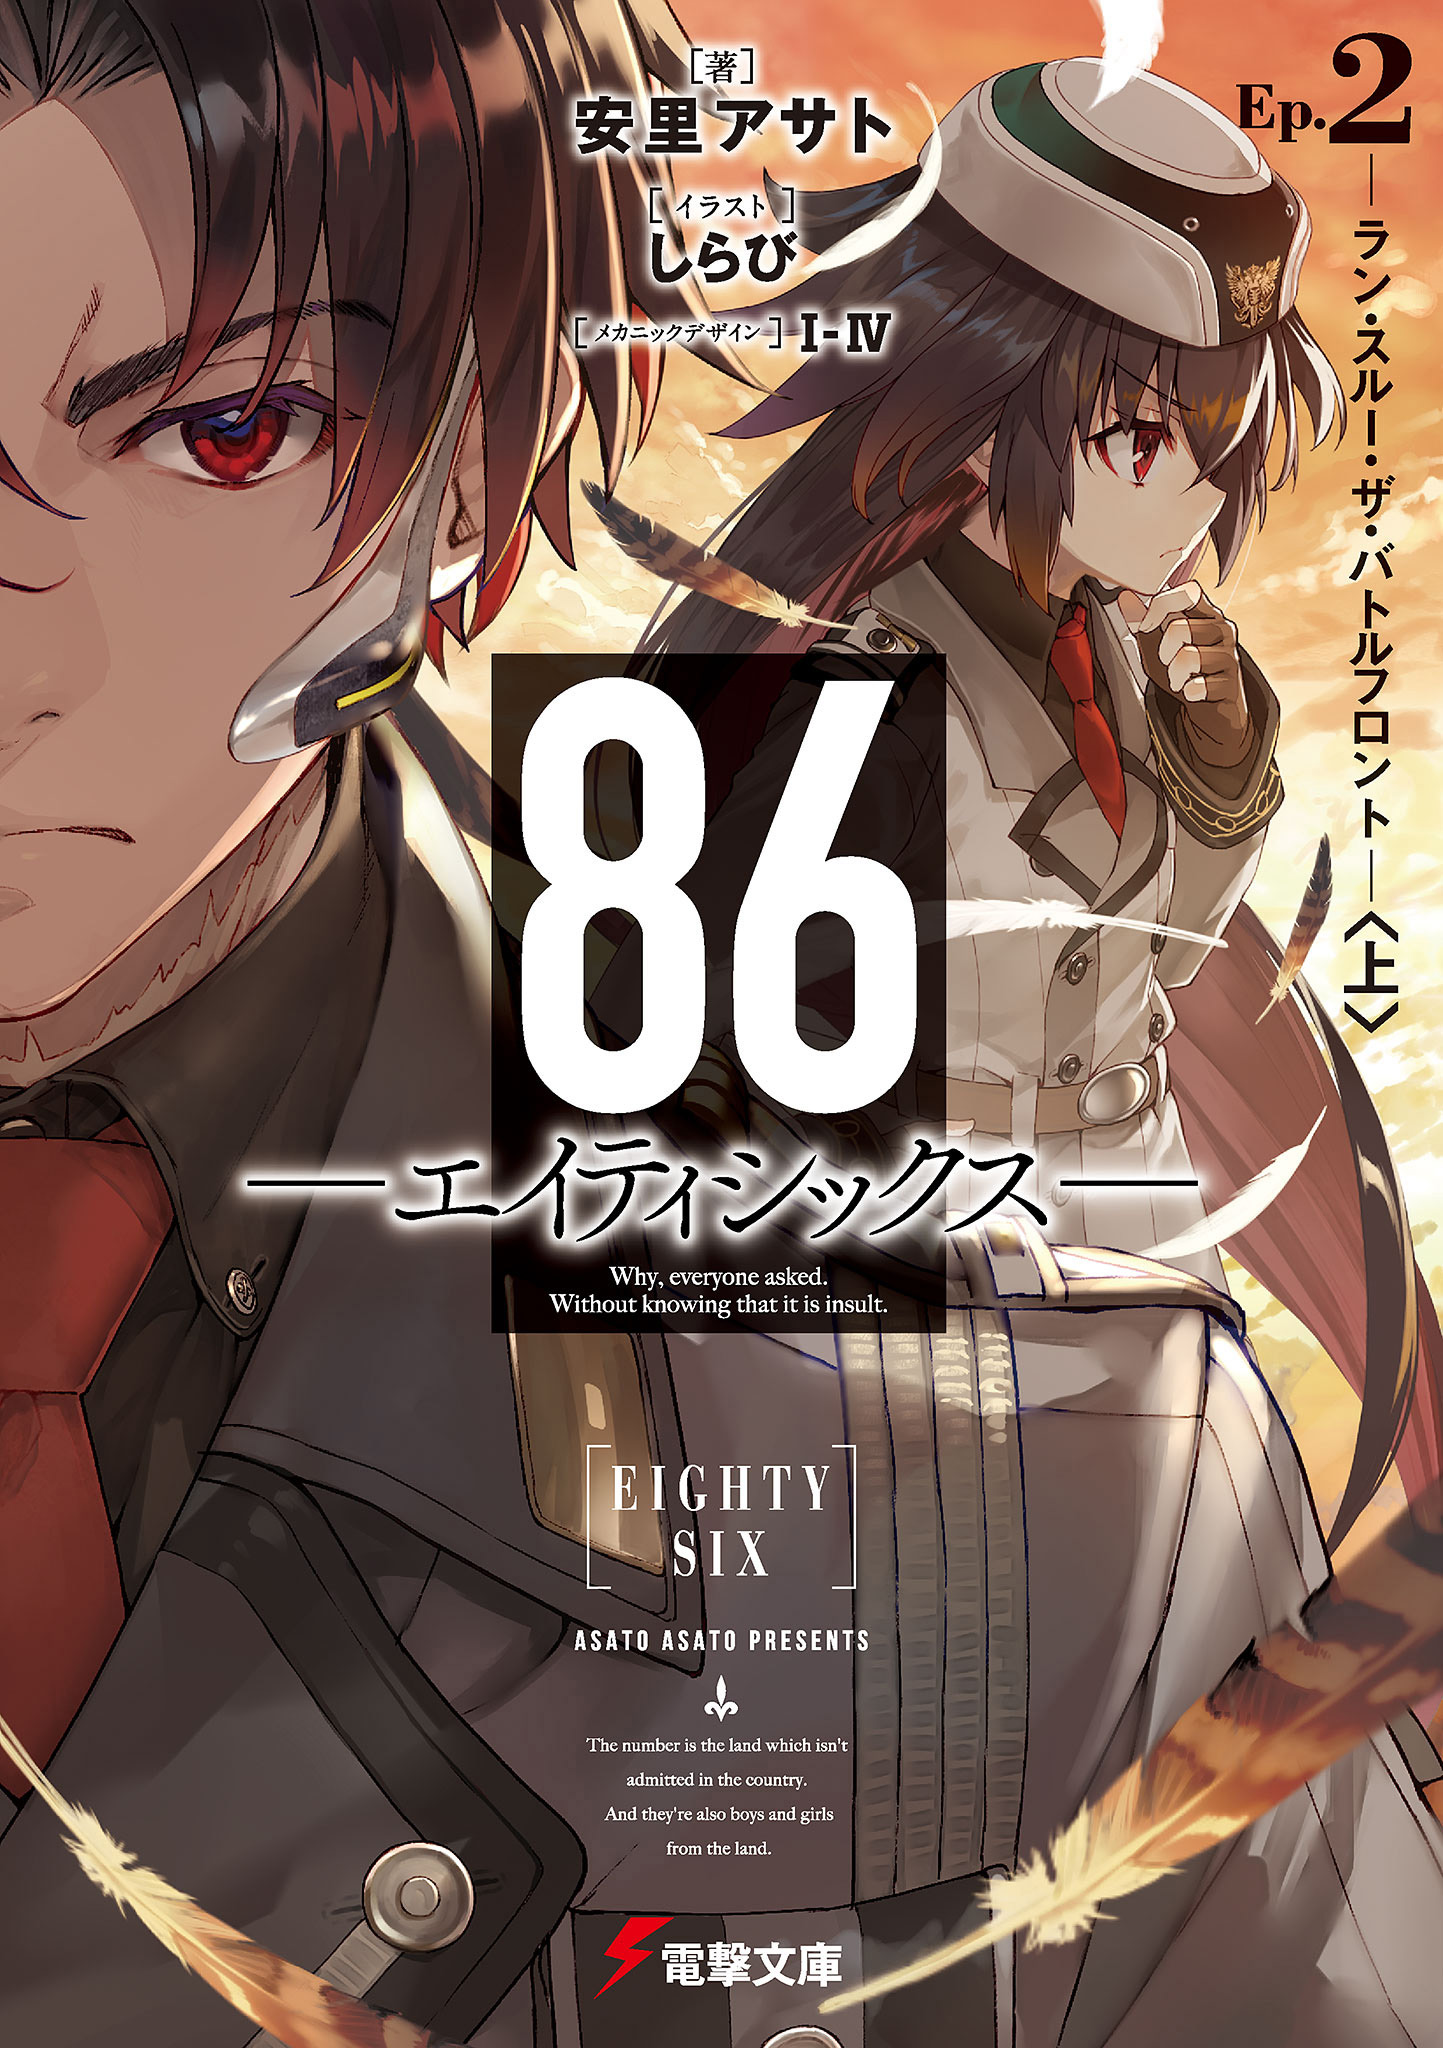 Light Novel Volume 2 | 86 - Eighty Six - Wiki | FANDOM ...